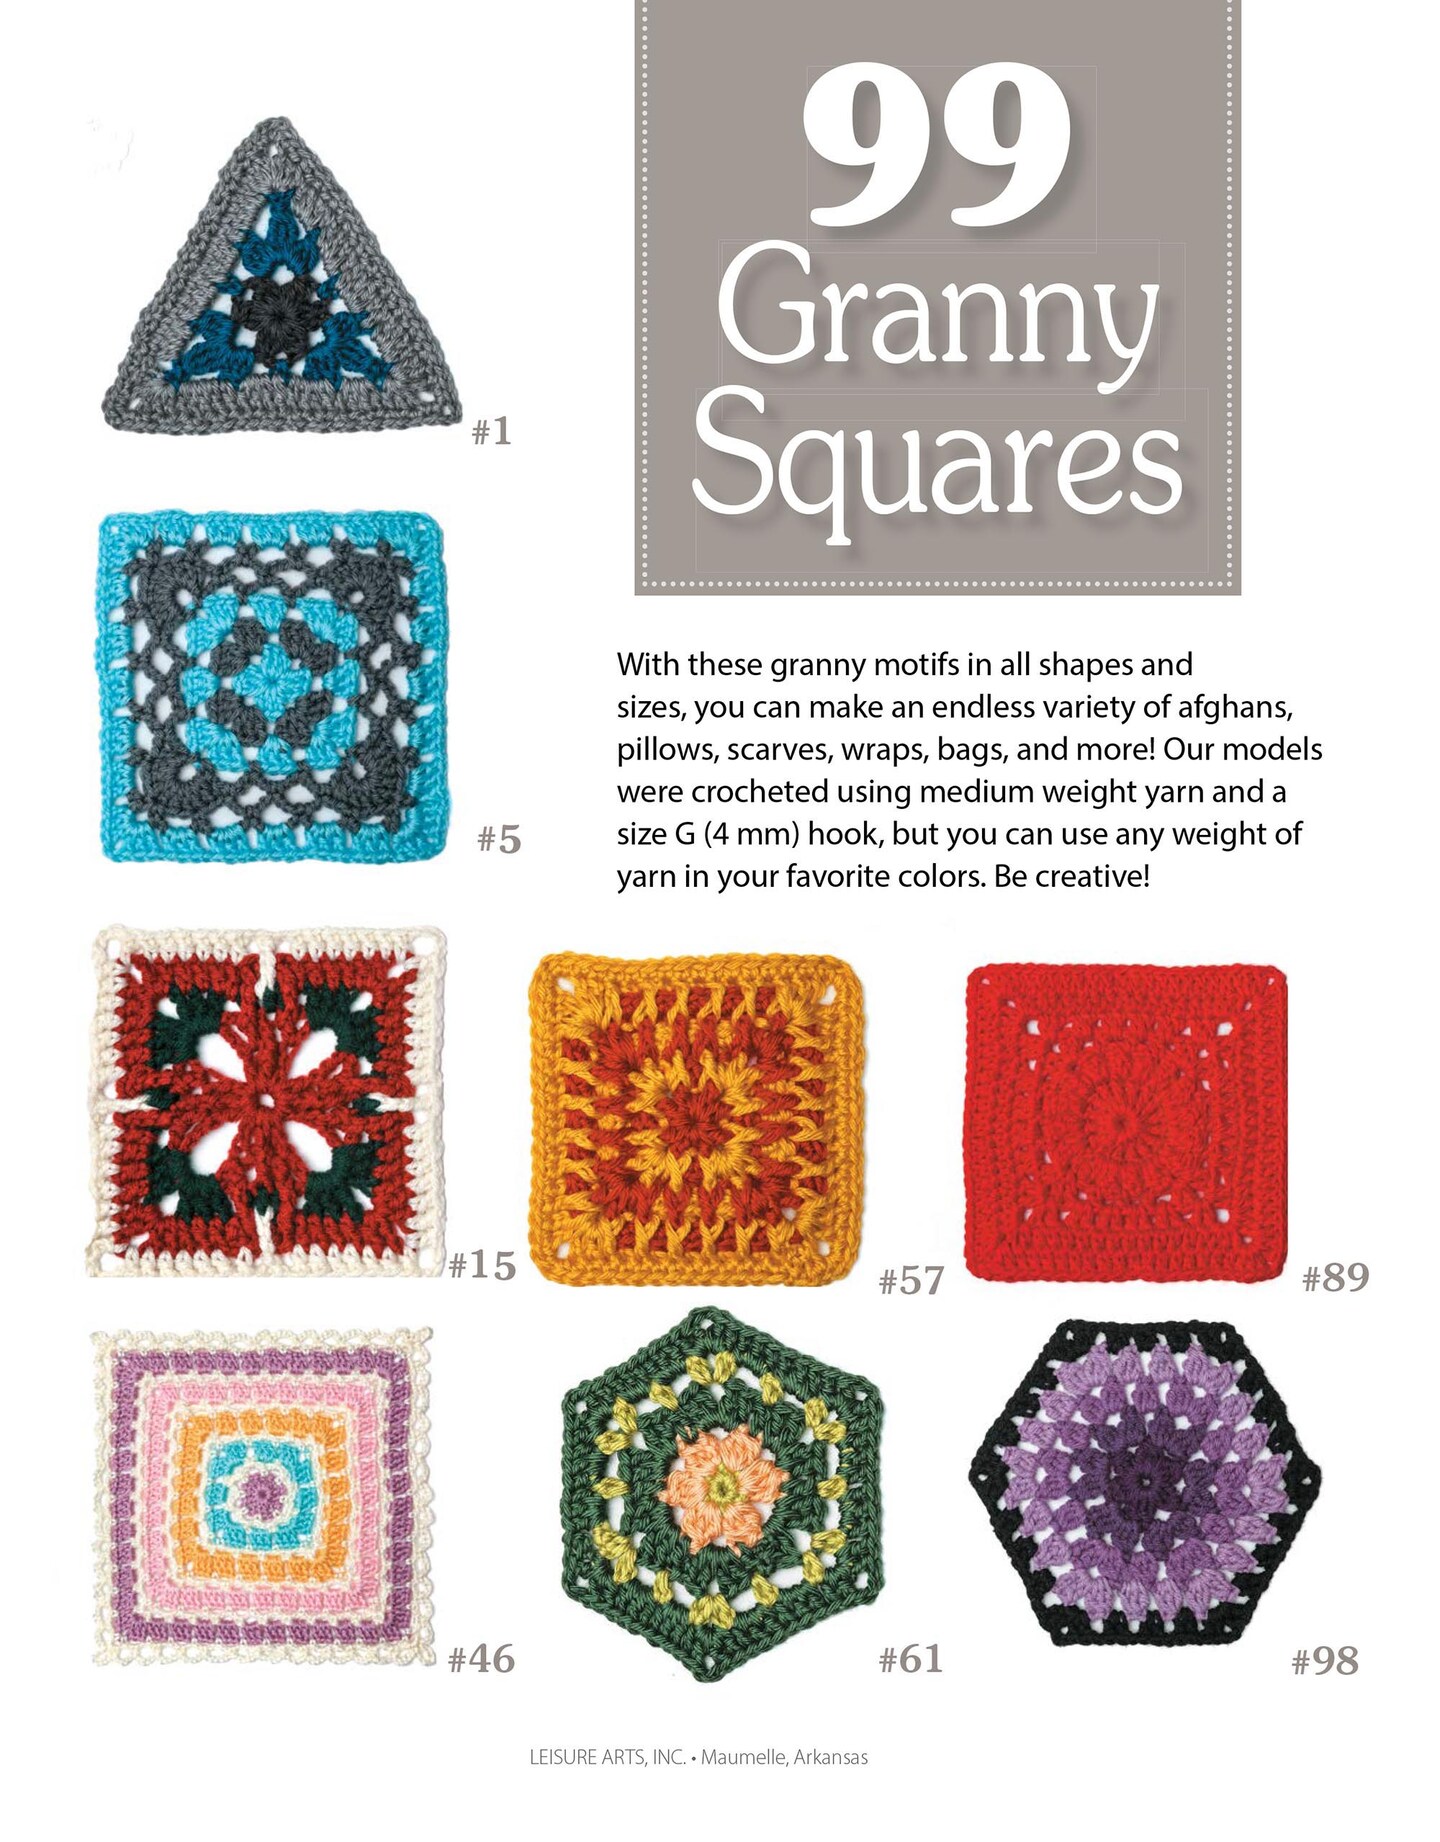 Leisure Arts 99 Granny Squares Crochet Book